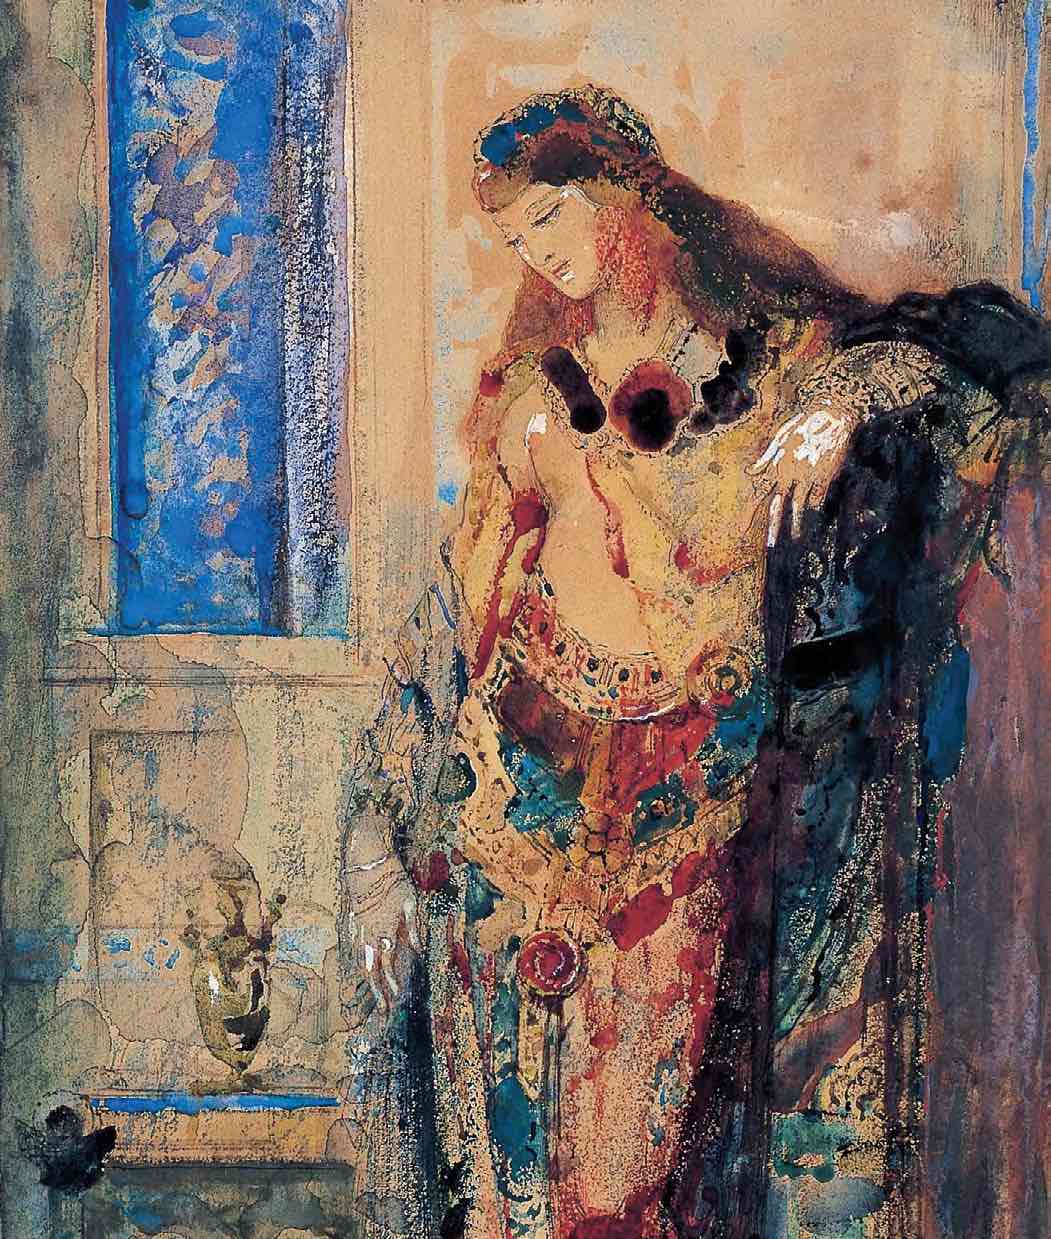 La Toilette (1885-1890), by Gustave Moreau. Wikimedia Commons